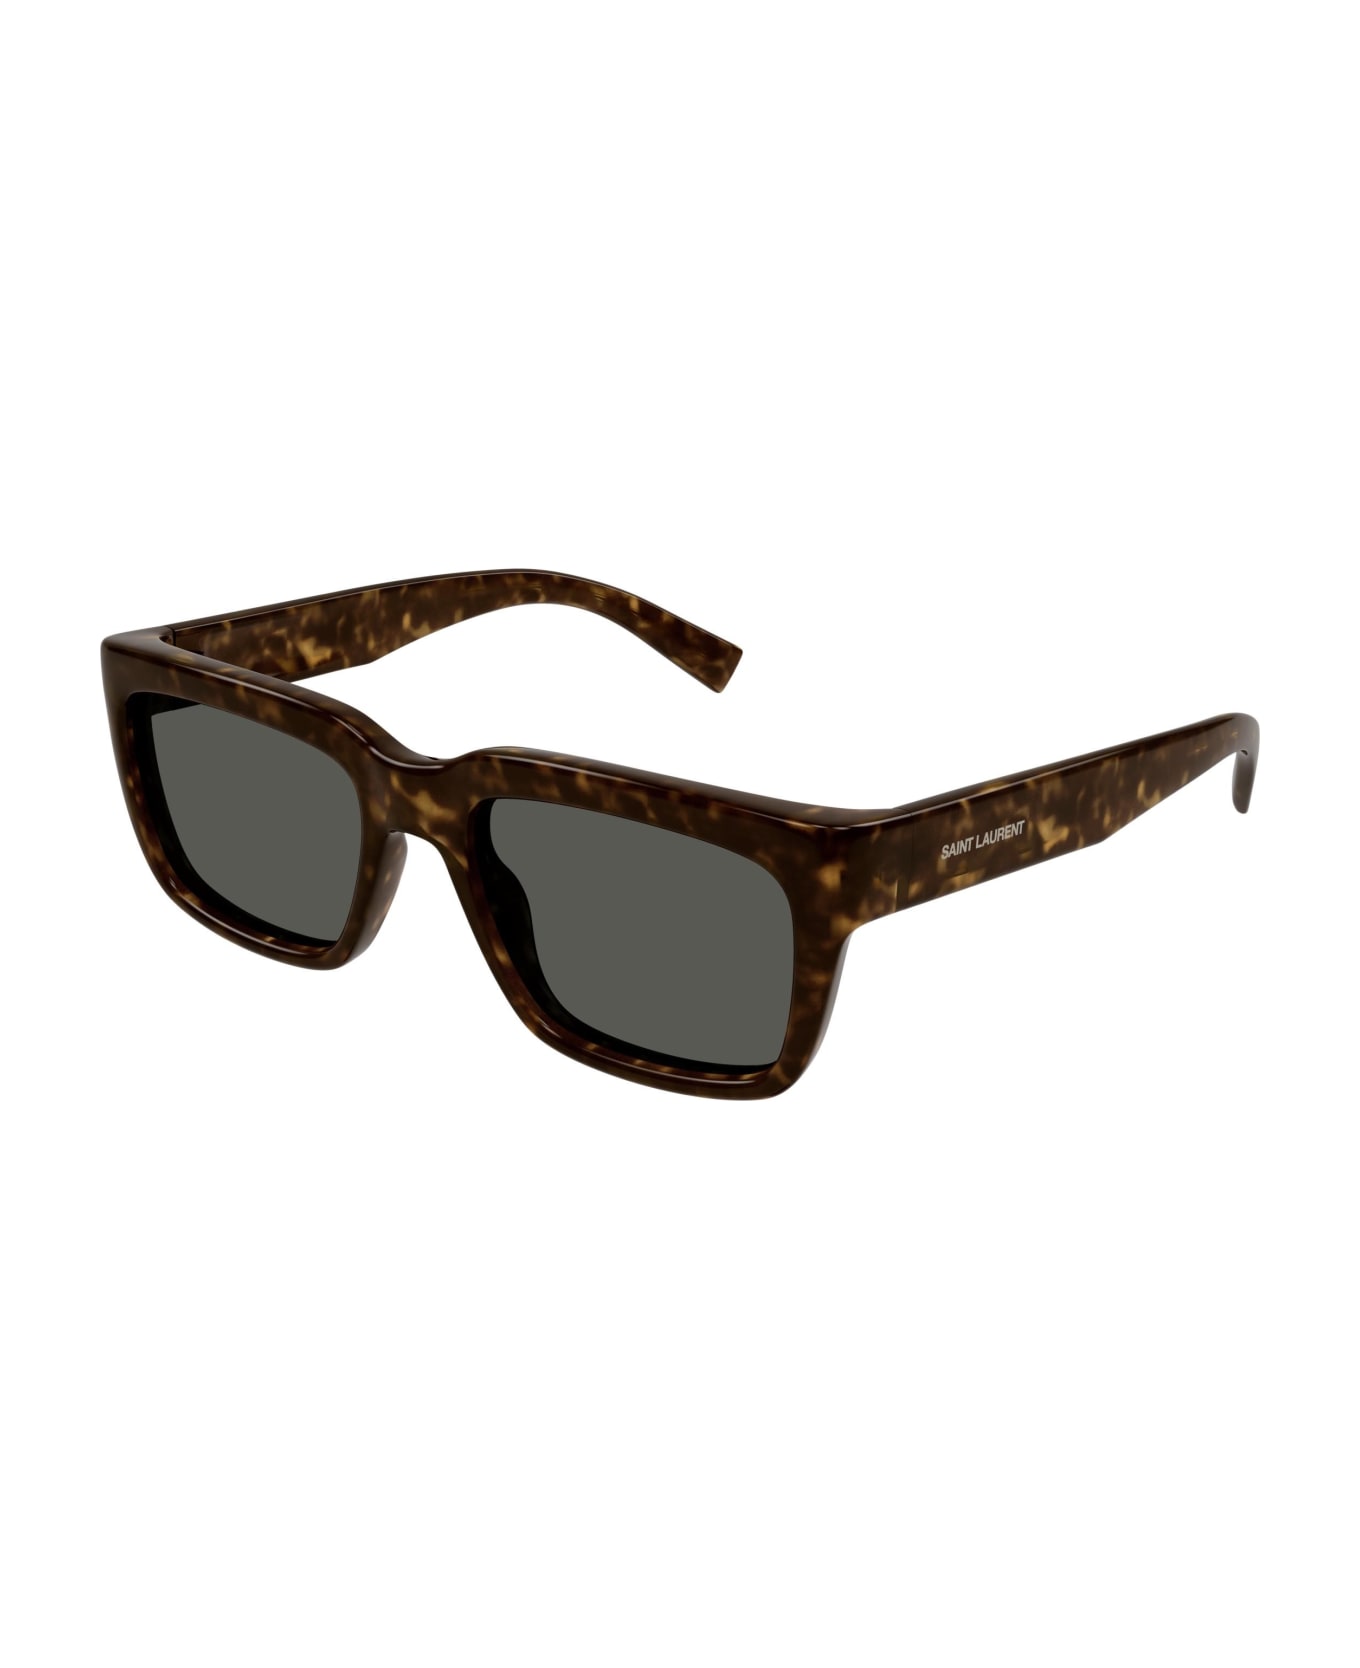 Saint Laurent Eyewear Sunglasses - Havana/Grigio サングラス